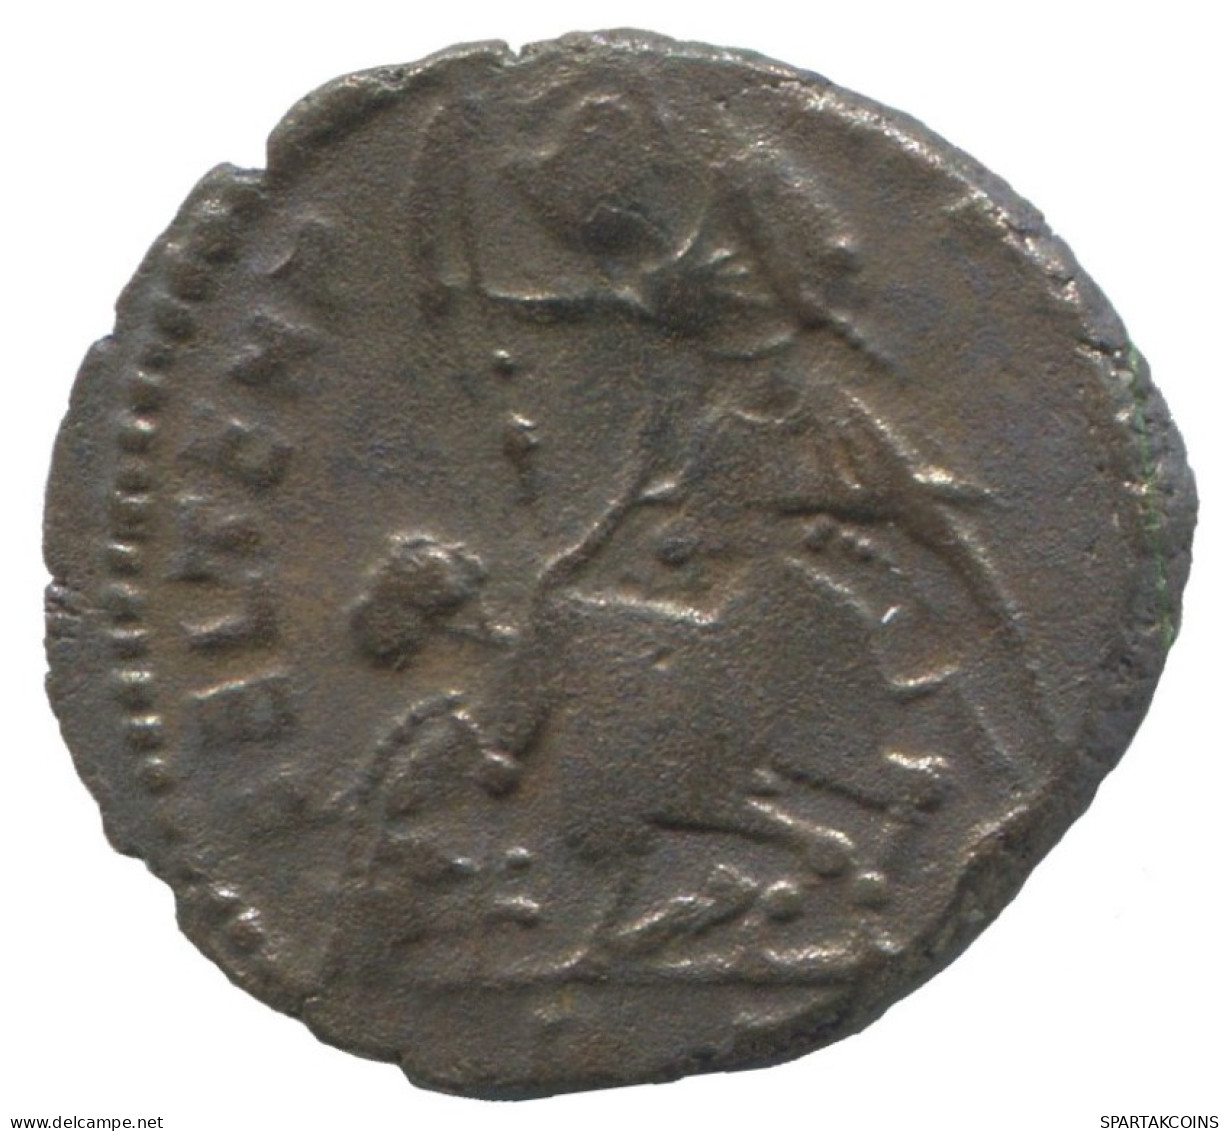 CONSTANTIUS II AD337-361 FEL TEMP REPARATIO TWO SOLDIER 1.6g/18mm #ANN1641.30.F.A - The Christian Empire (307 AD To 363 AD)